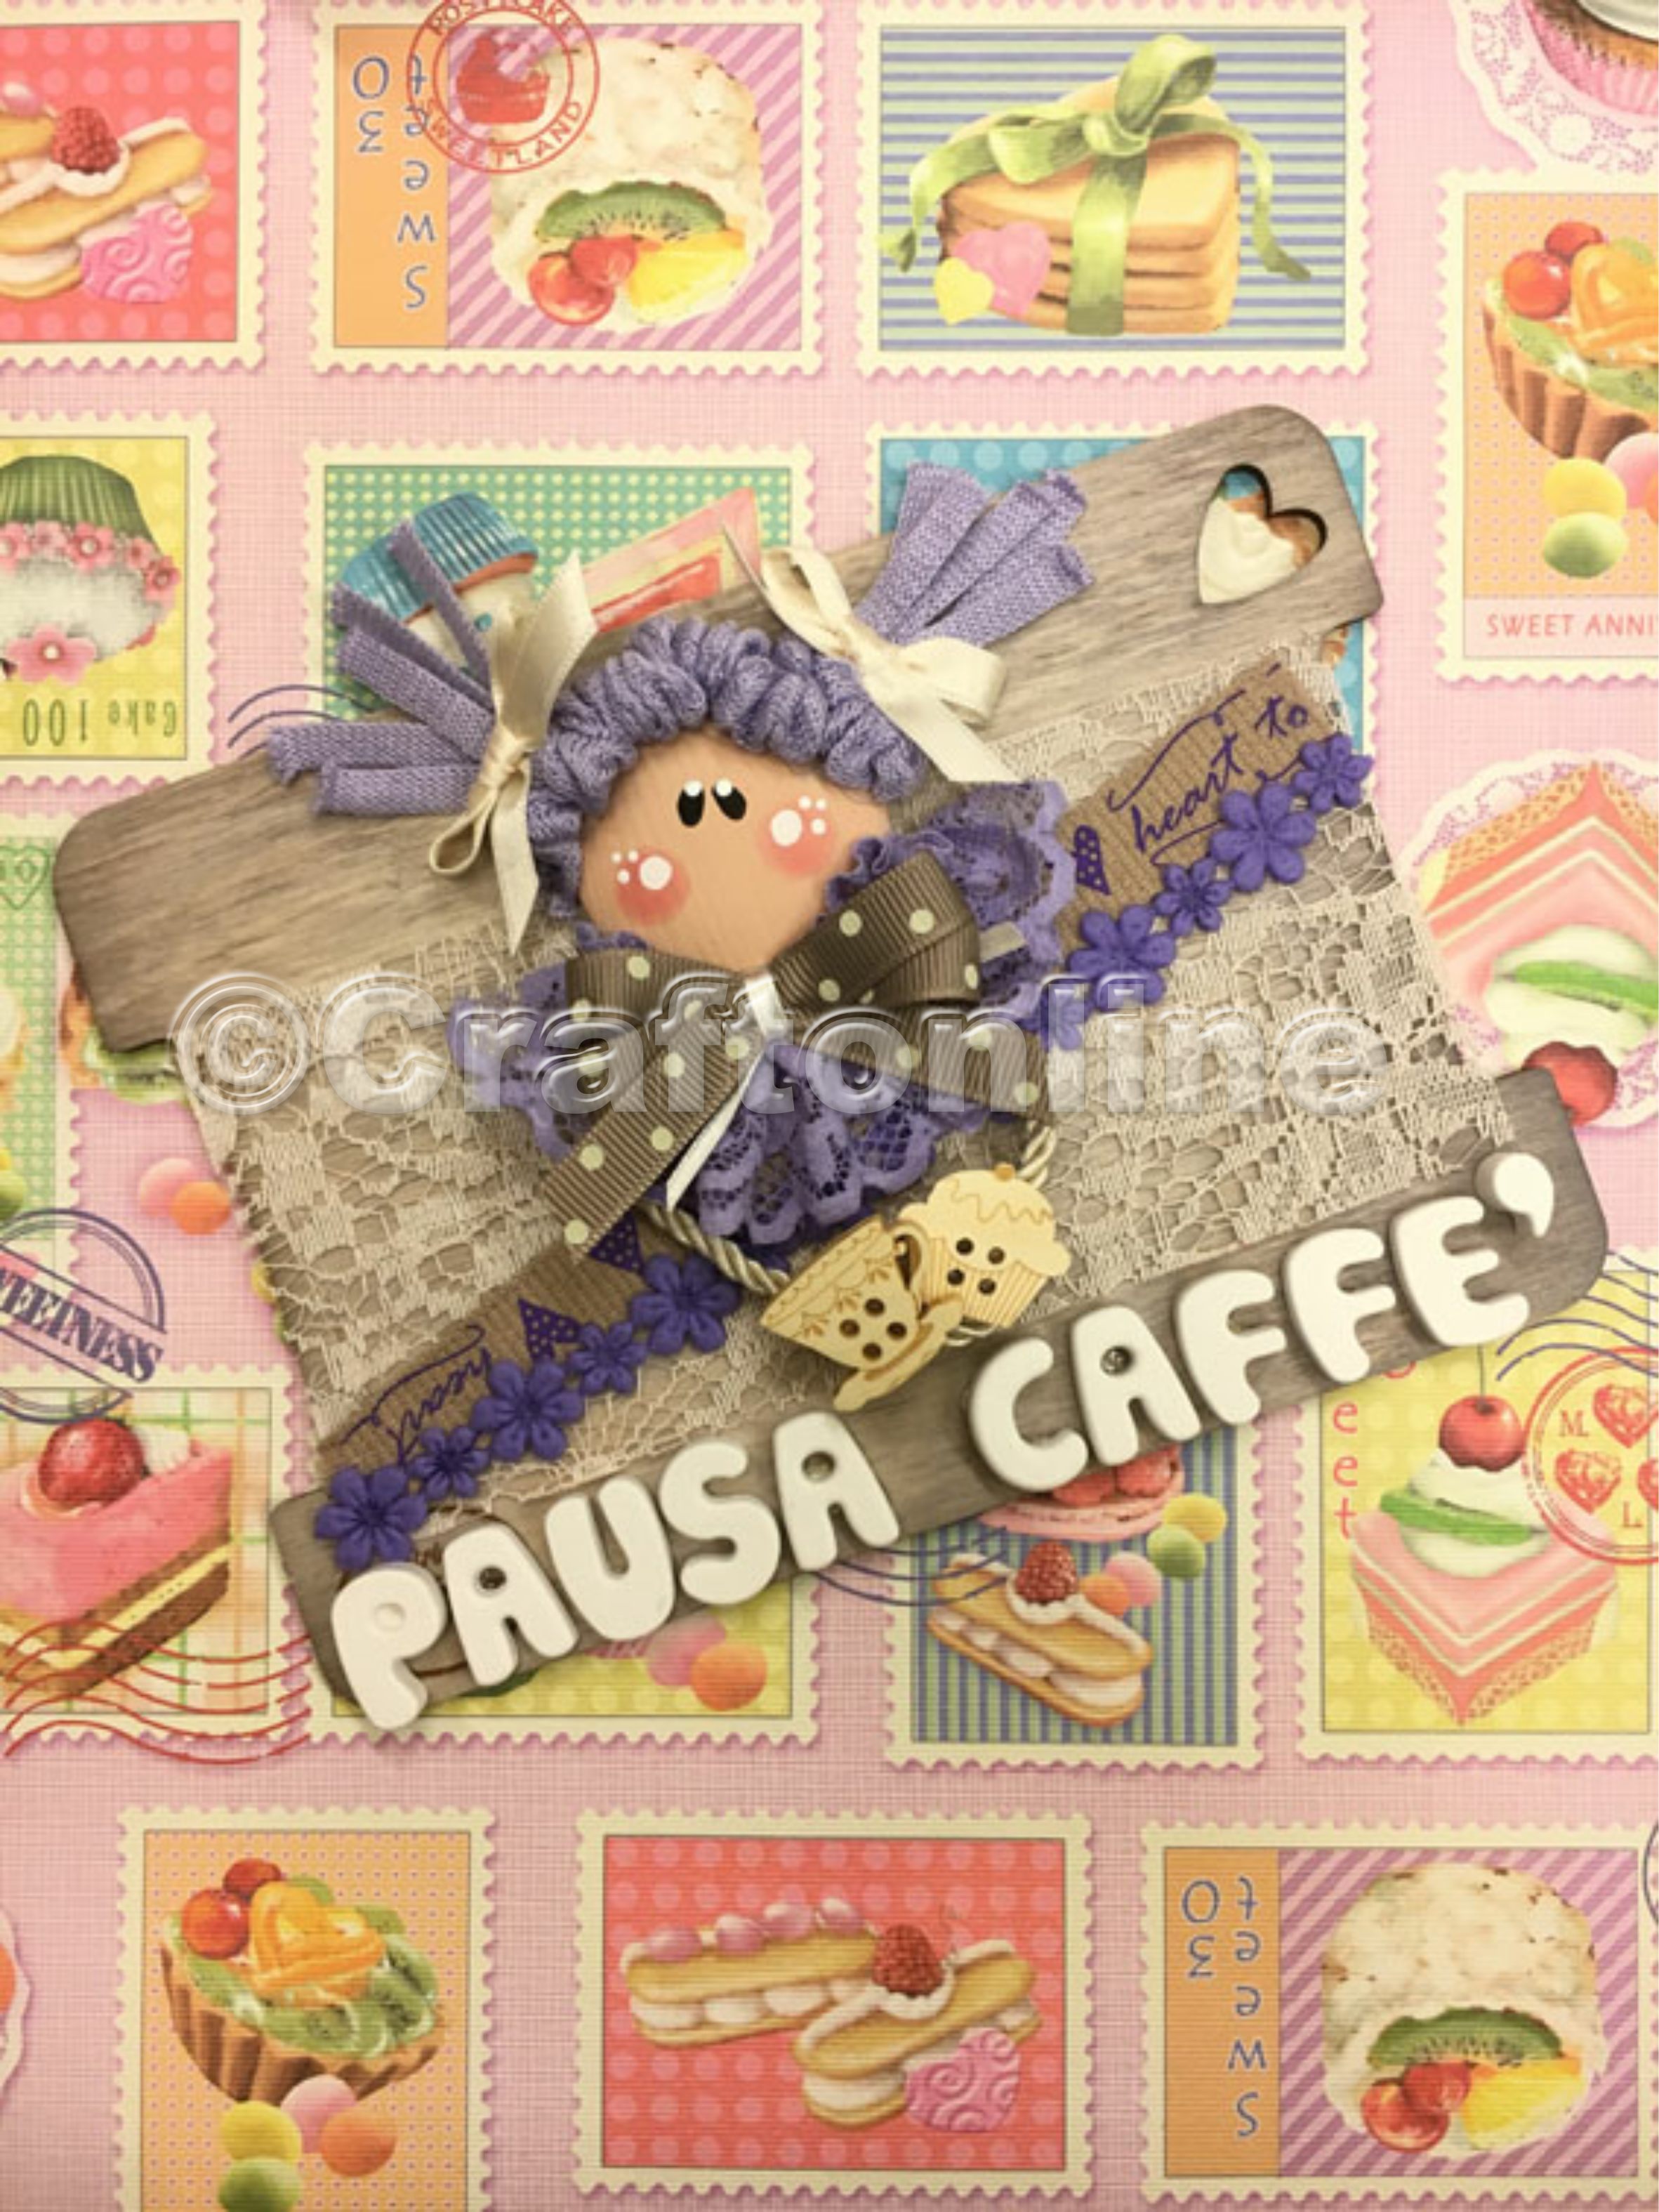 Happy tag pausa caffe